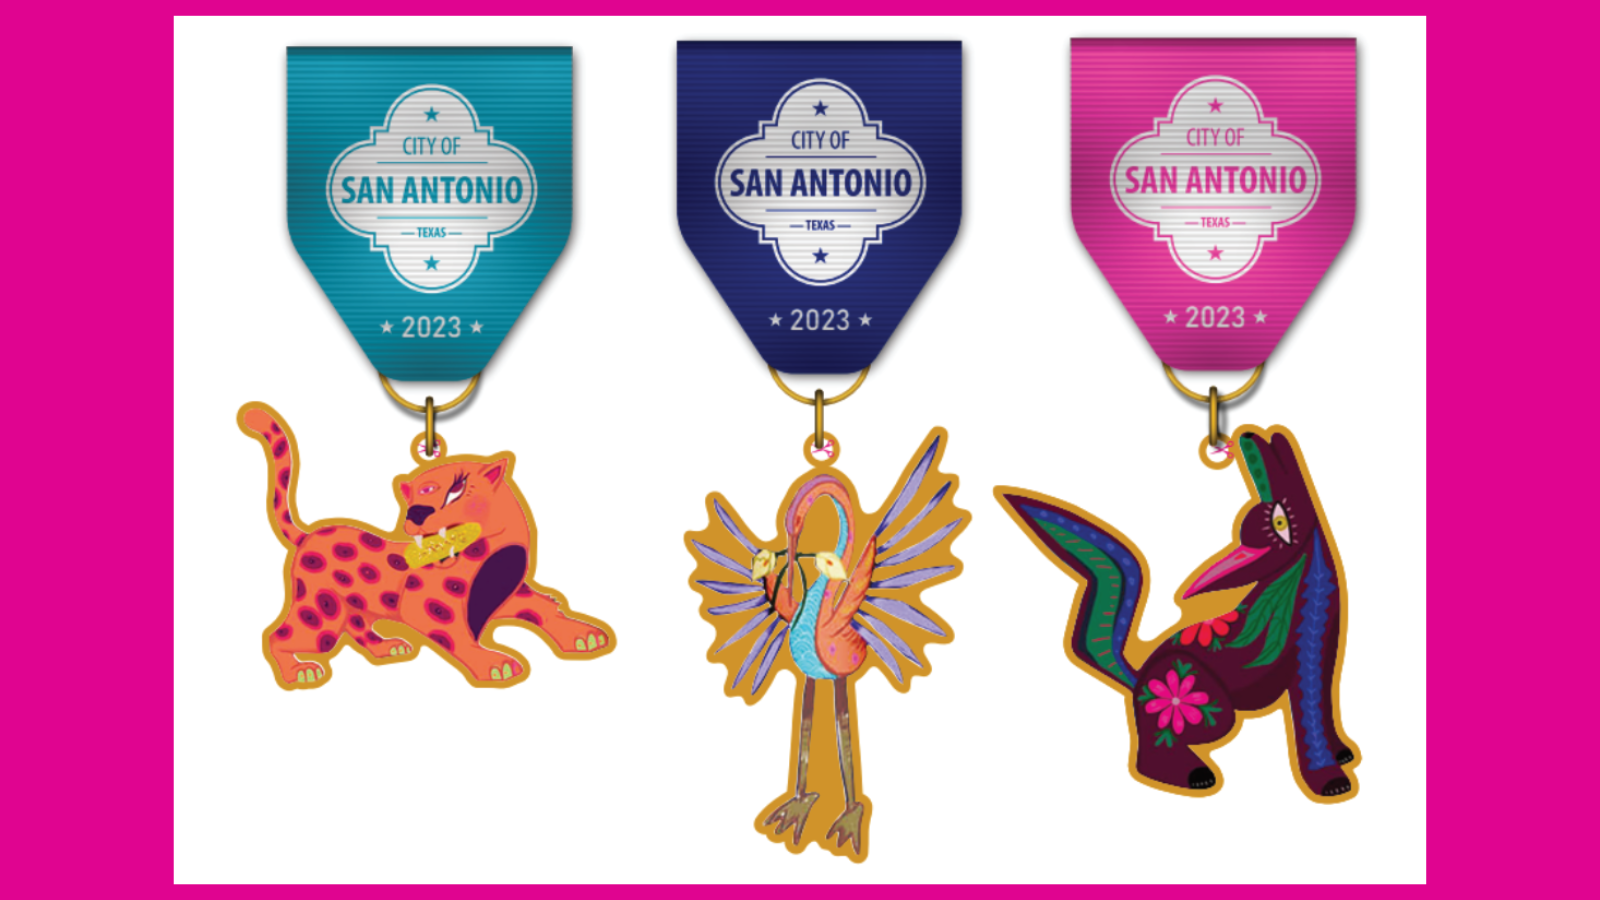 City of San Antonio releases official 2023 Fiesta medals